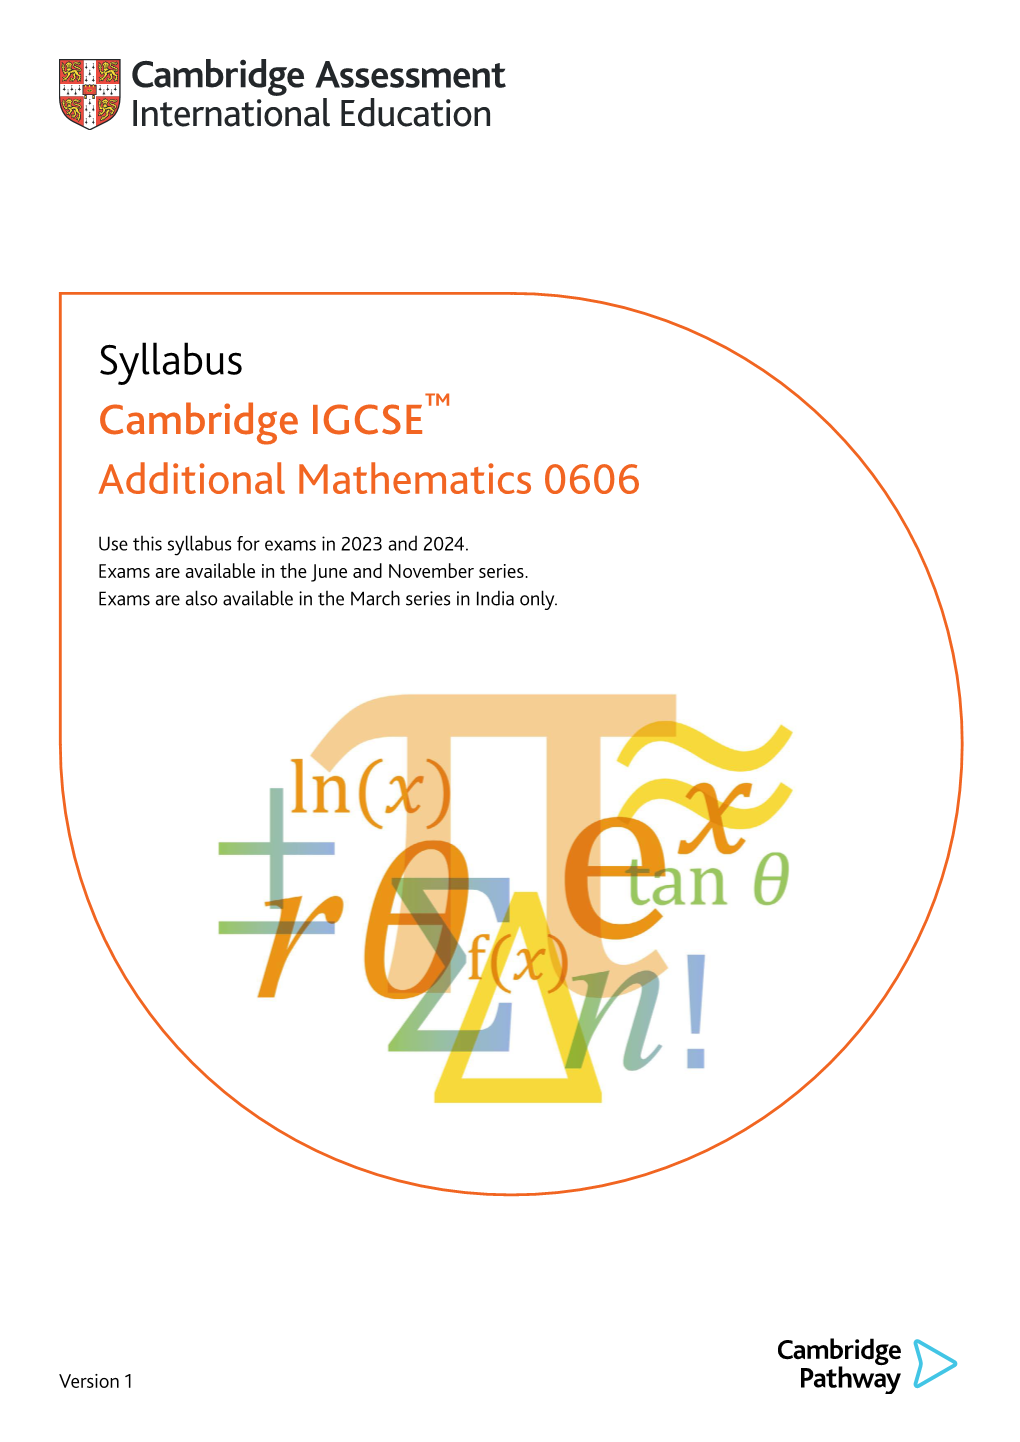 Syllabus Cambridge IGCSE Additional Mathematics 0606